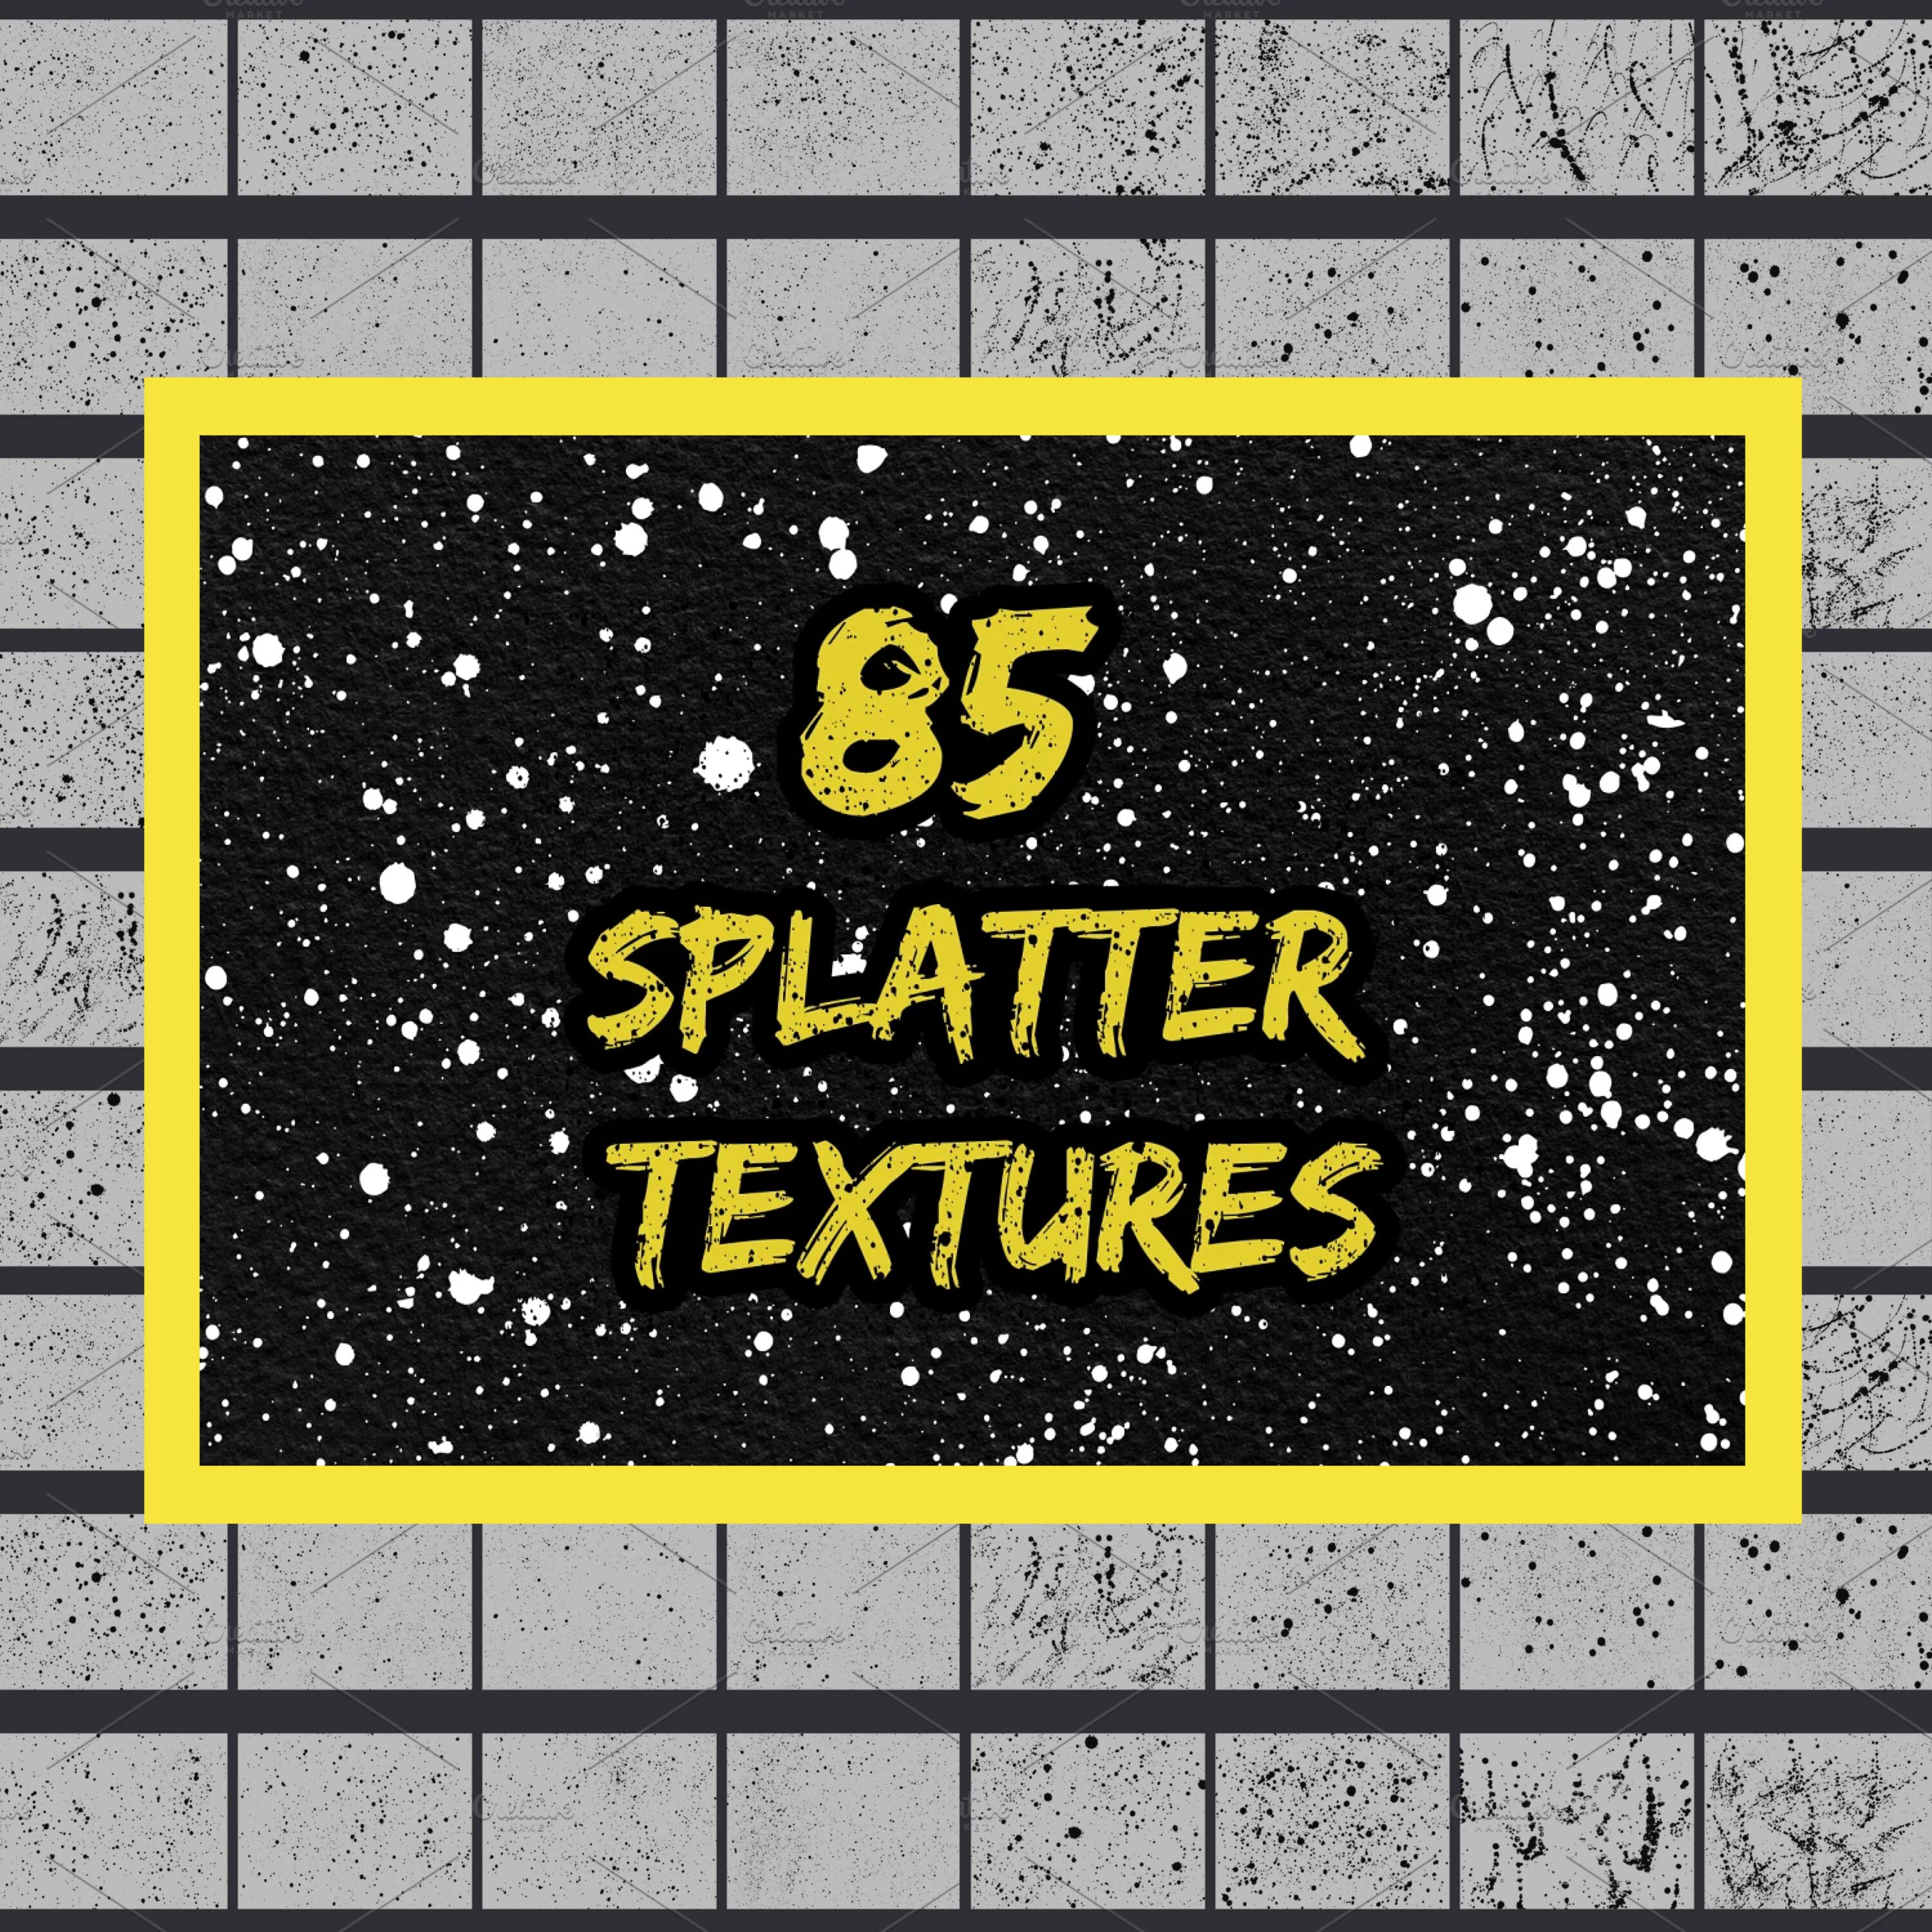 85 Ink Splatters Textures cover image.